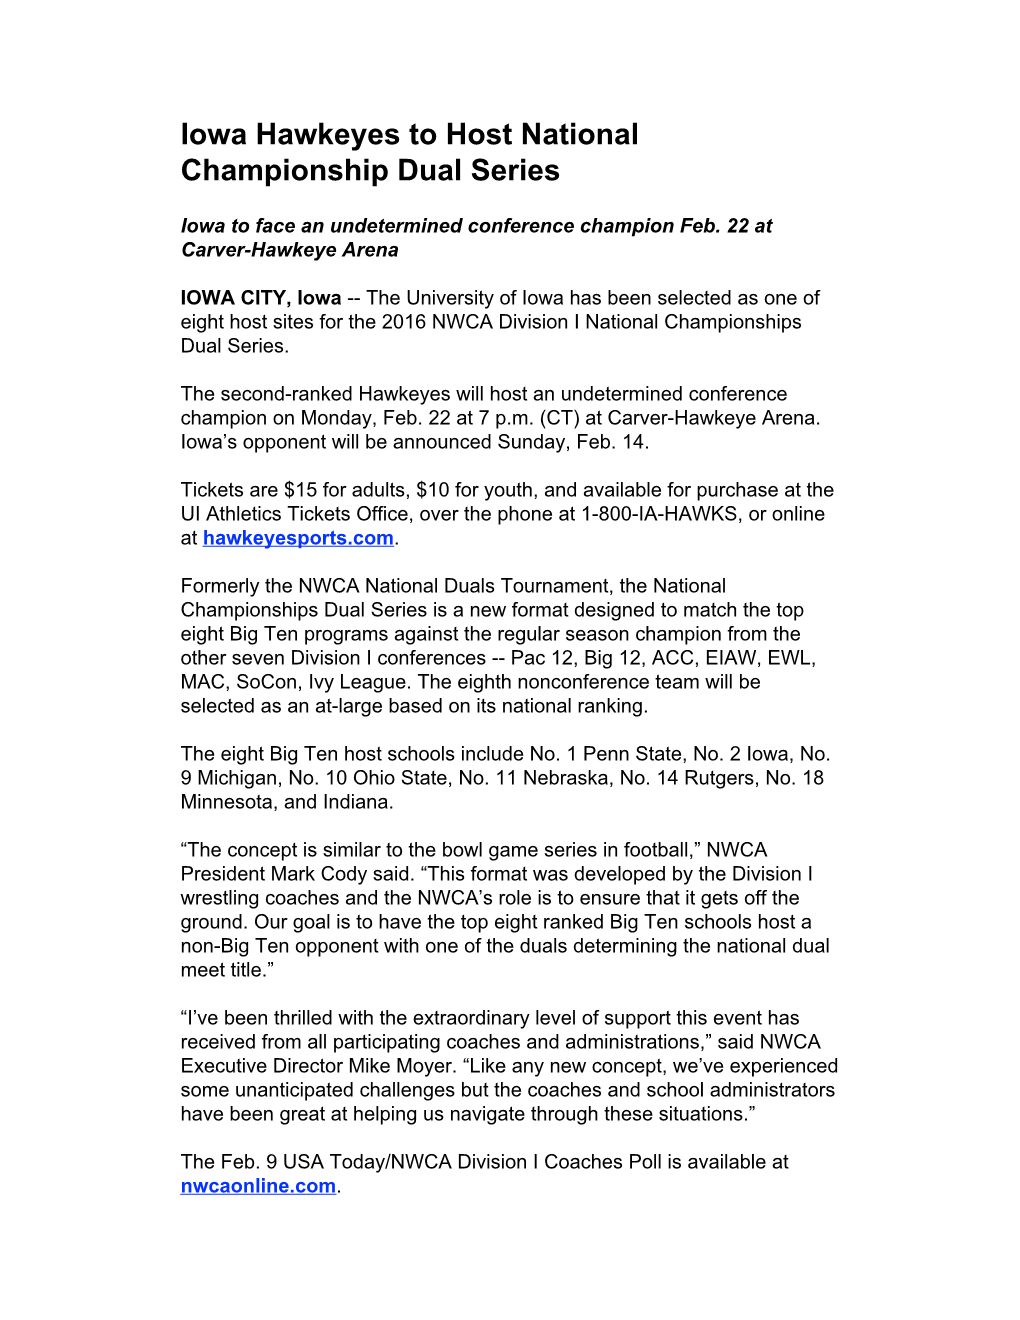 Iowa Hawkeyes to Host National Championship Dual Series